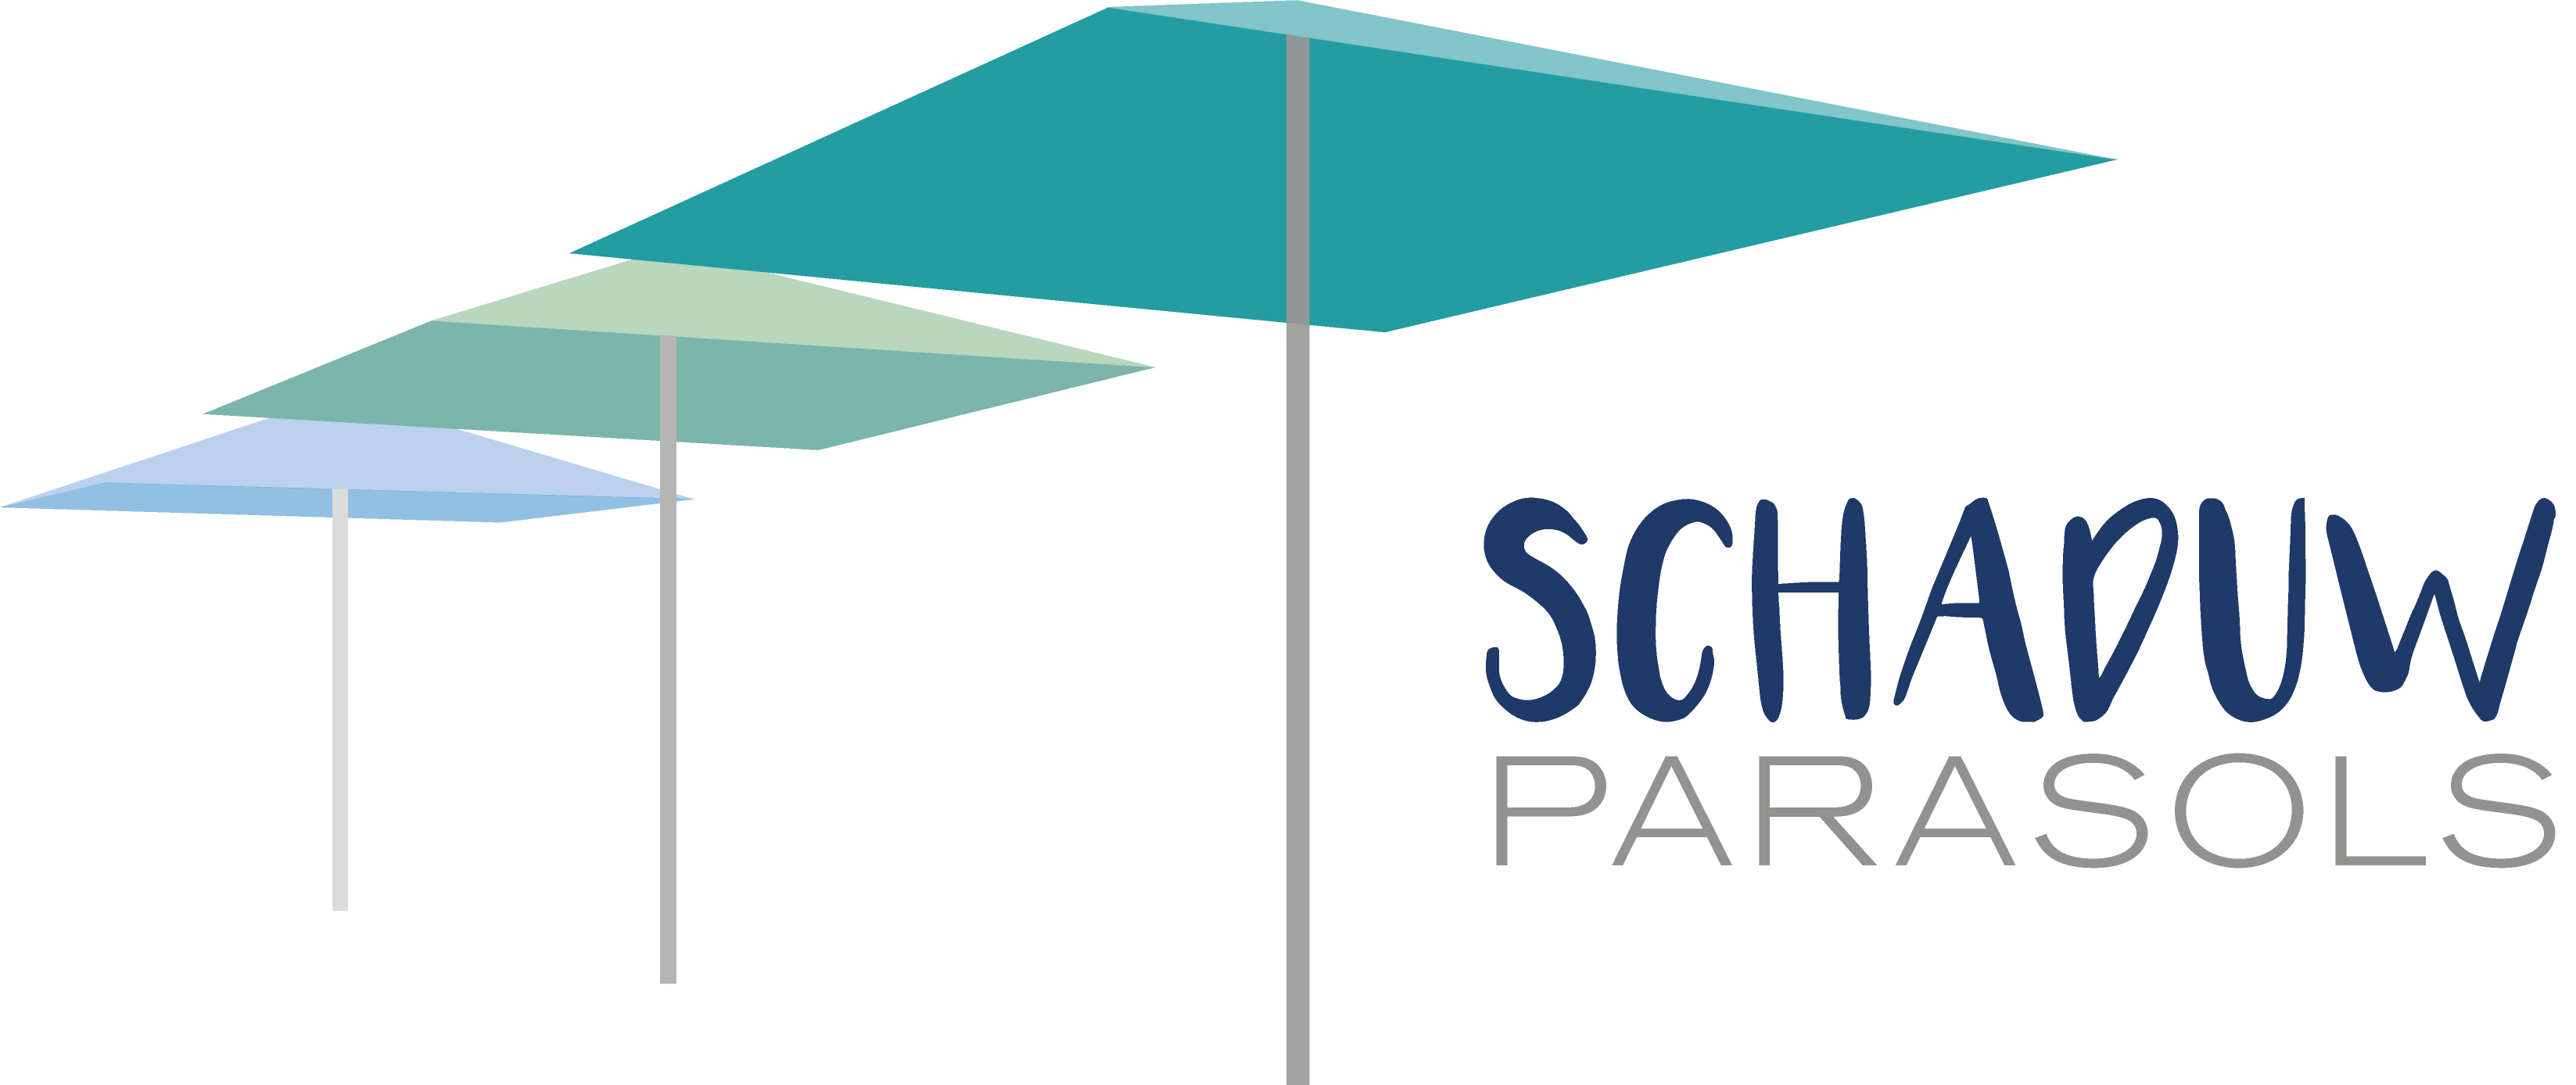 Schaduwparasols Logo